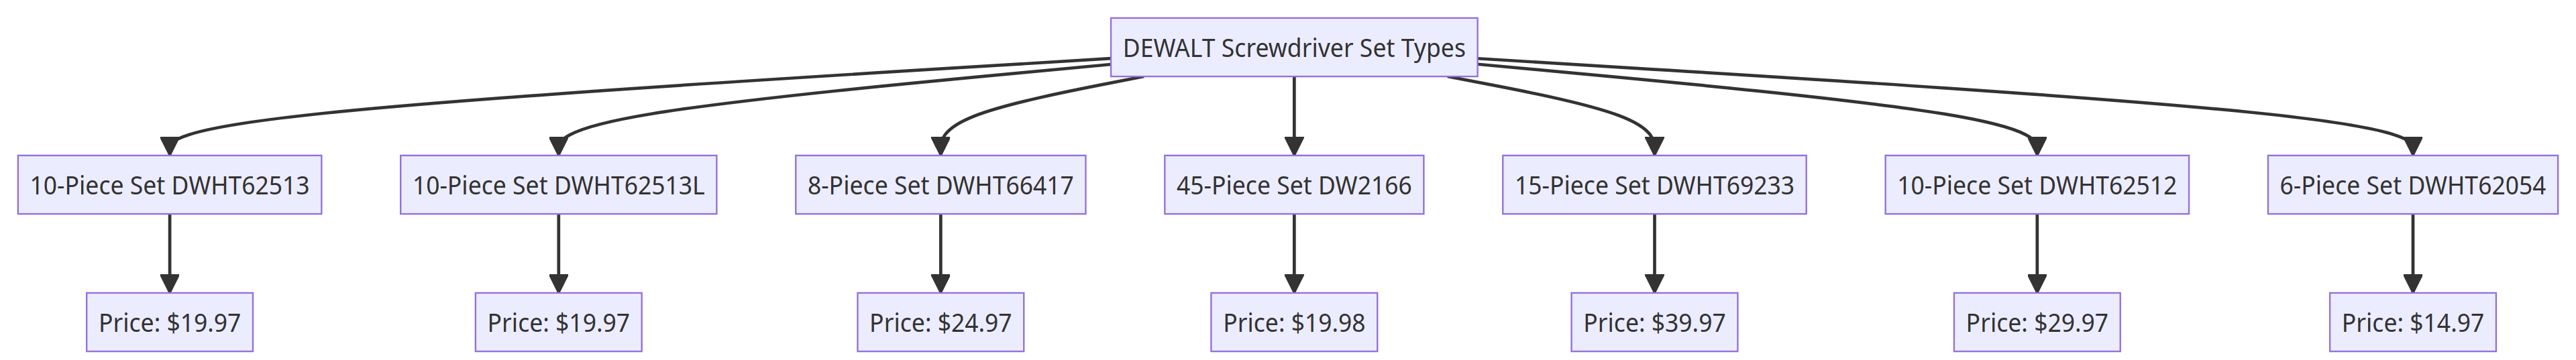 Flow Chart of DEWALT Screwdriver Set Types and Prices